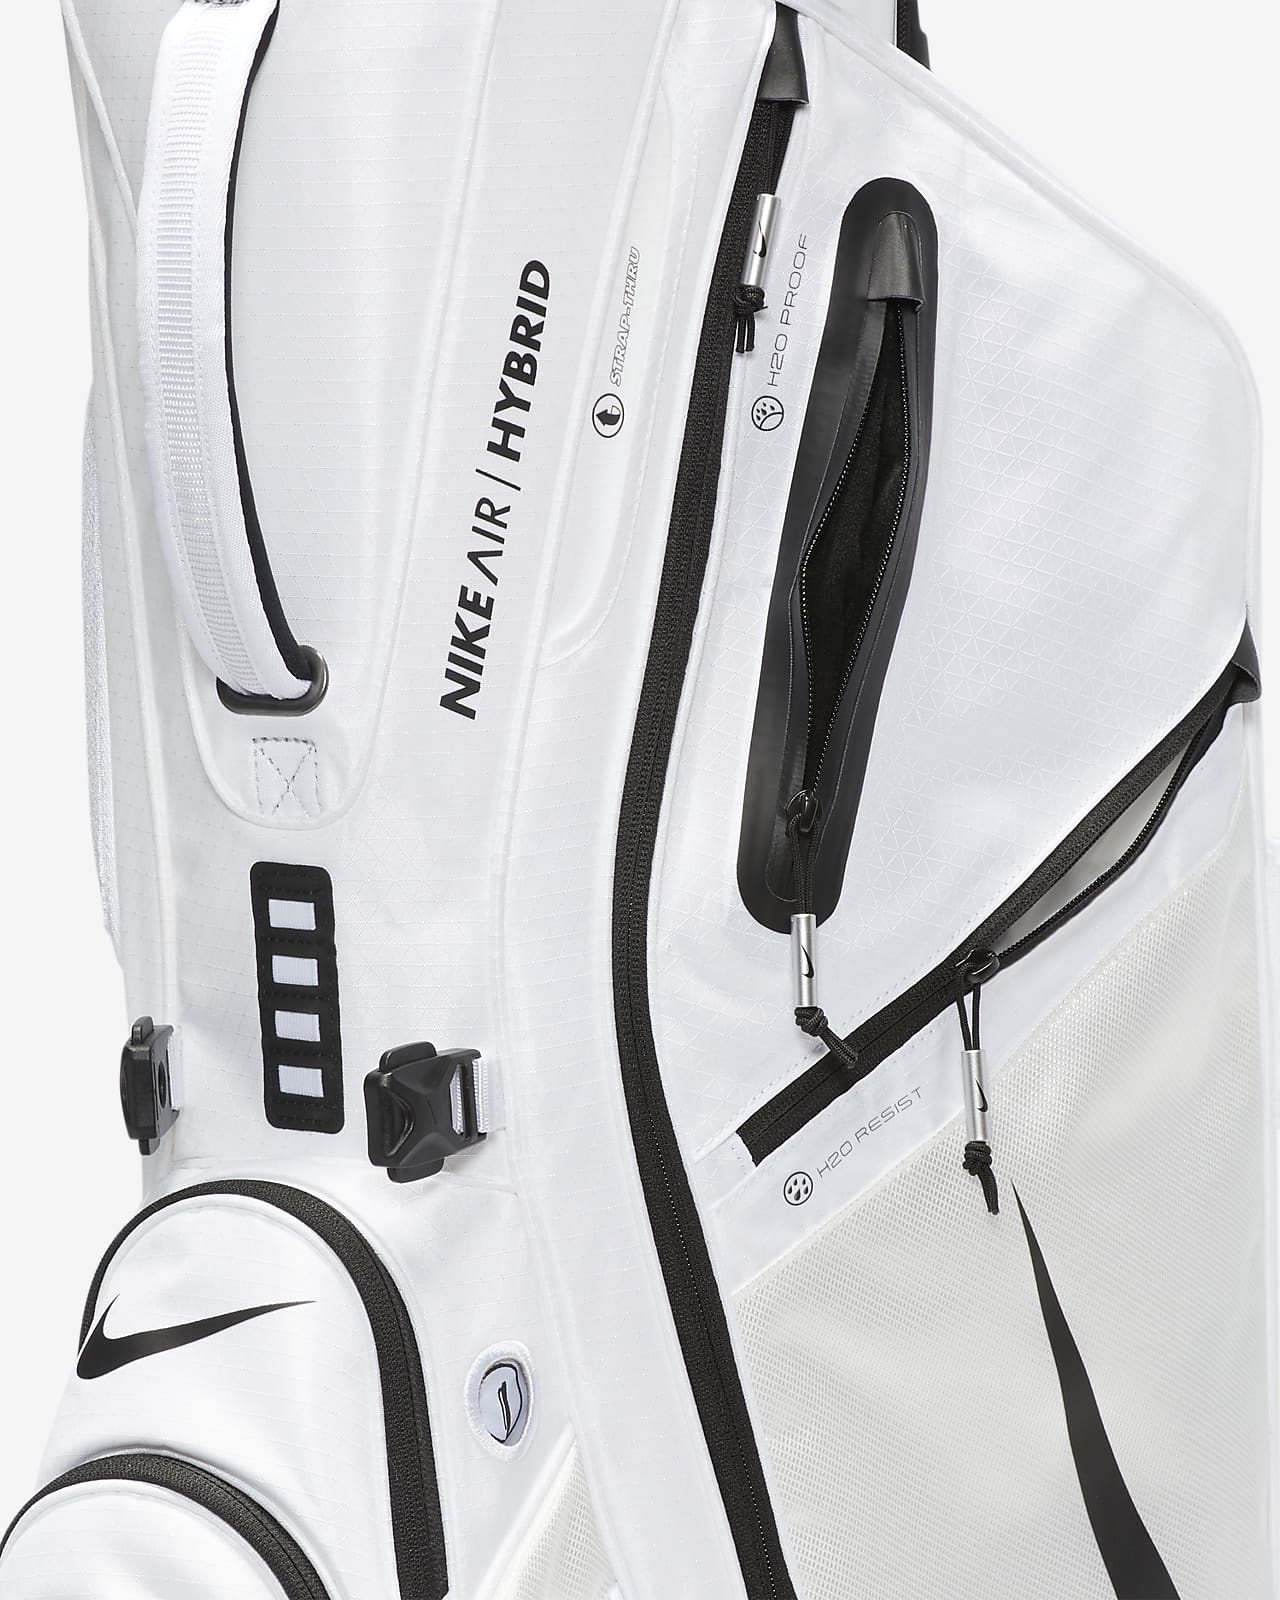 Nike Hybrid Golf Bag. Nike.com